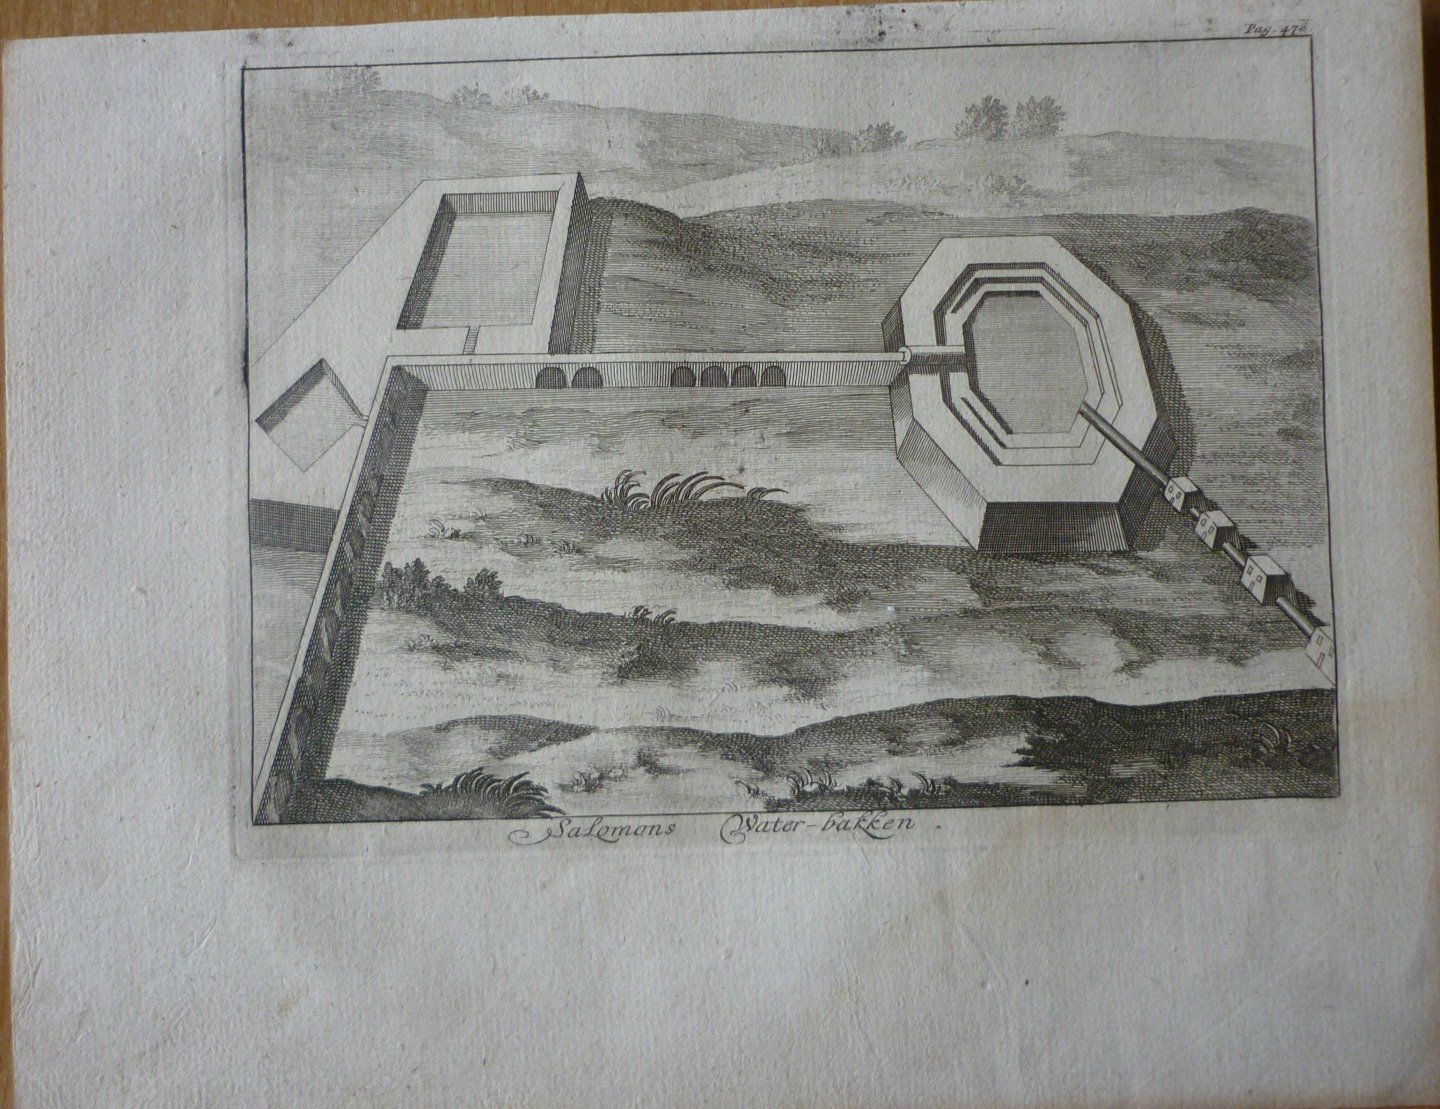 Halma, François - Salomons Water-bakken Originele gravure